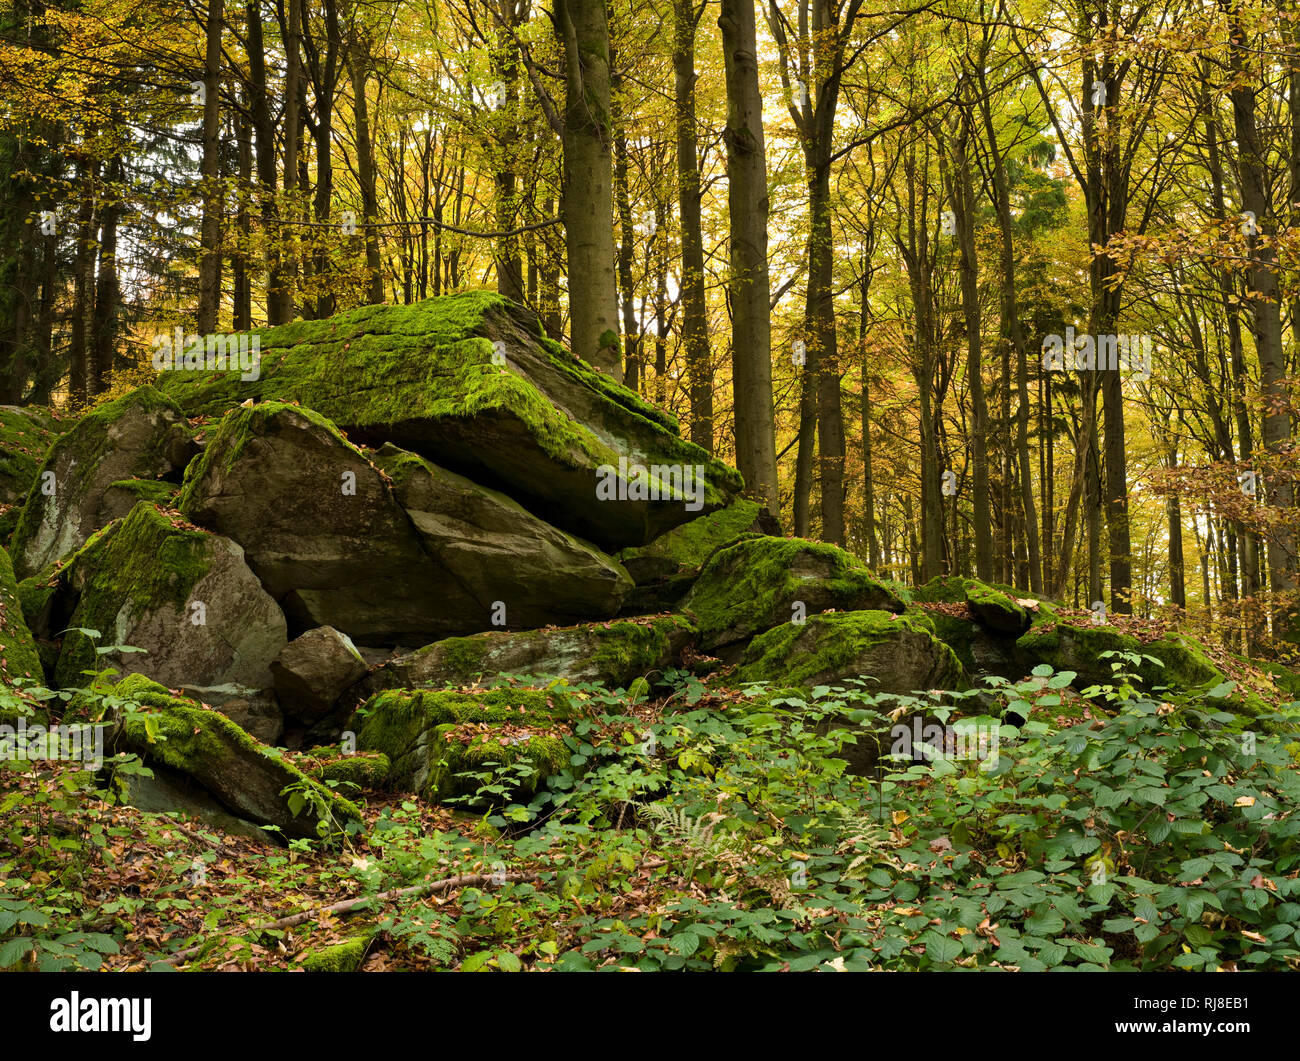 Deutschland, Assia, Naturpark Hessische Rhön, UNESCO-Biosphärenreservat, Felsgruppe im Buchenwald bei Poppenhausen, Herbst Foto Stock